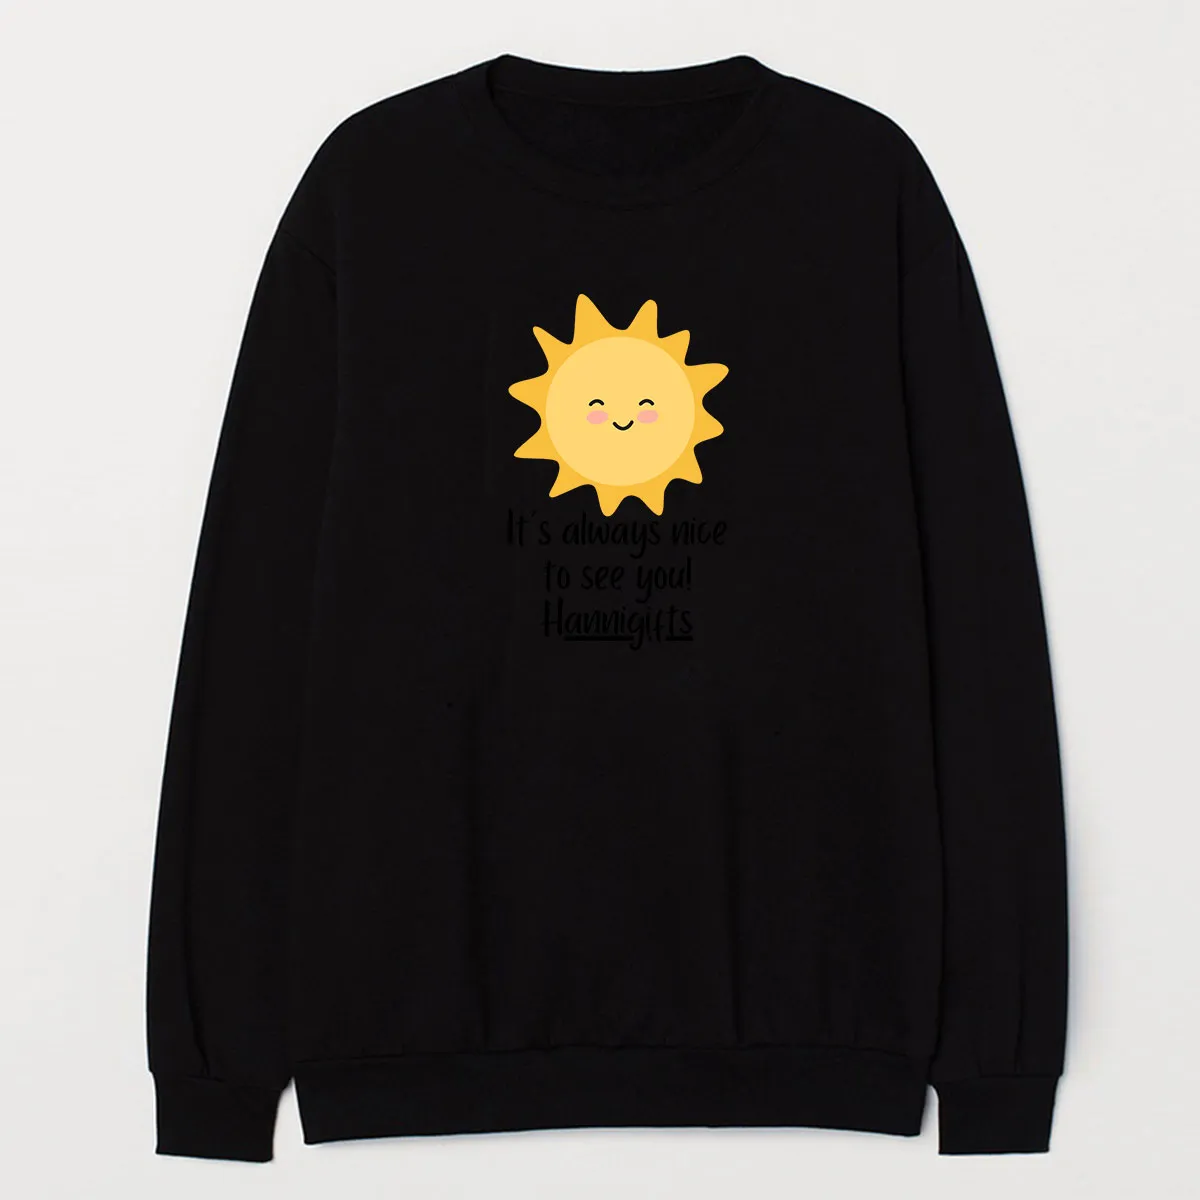 Sunny Hannigifts Sweatshirt - Black